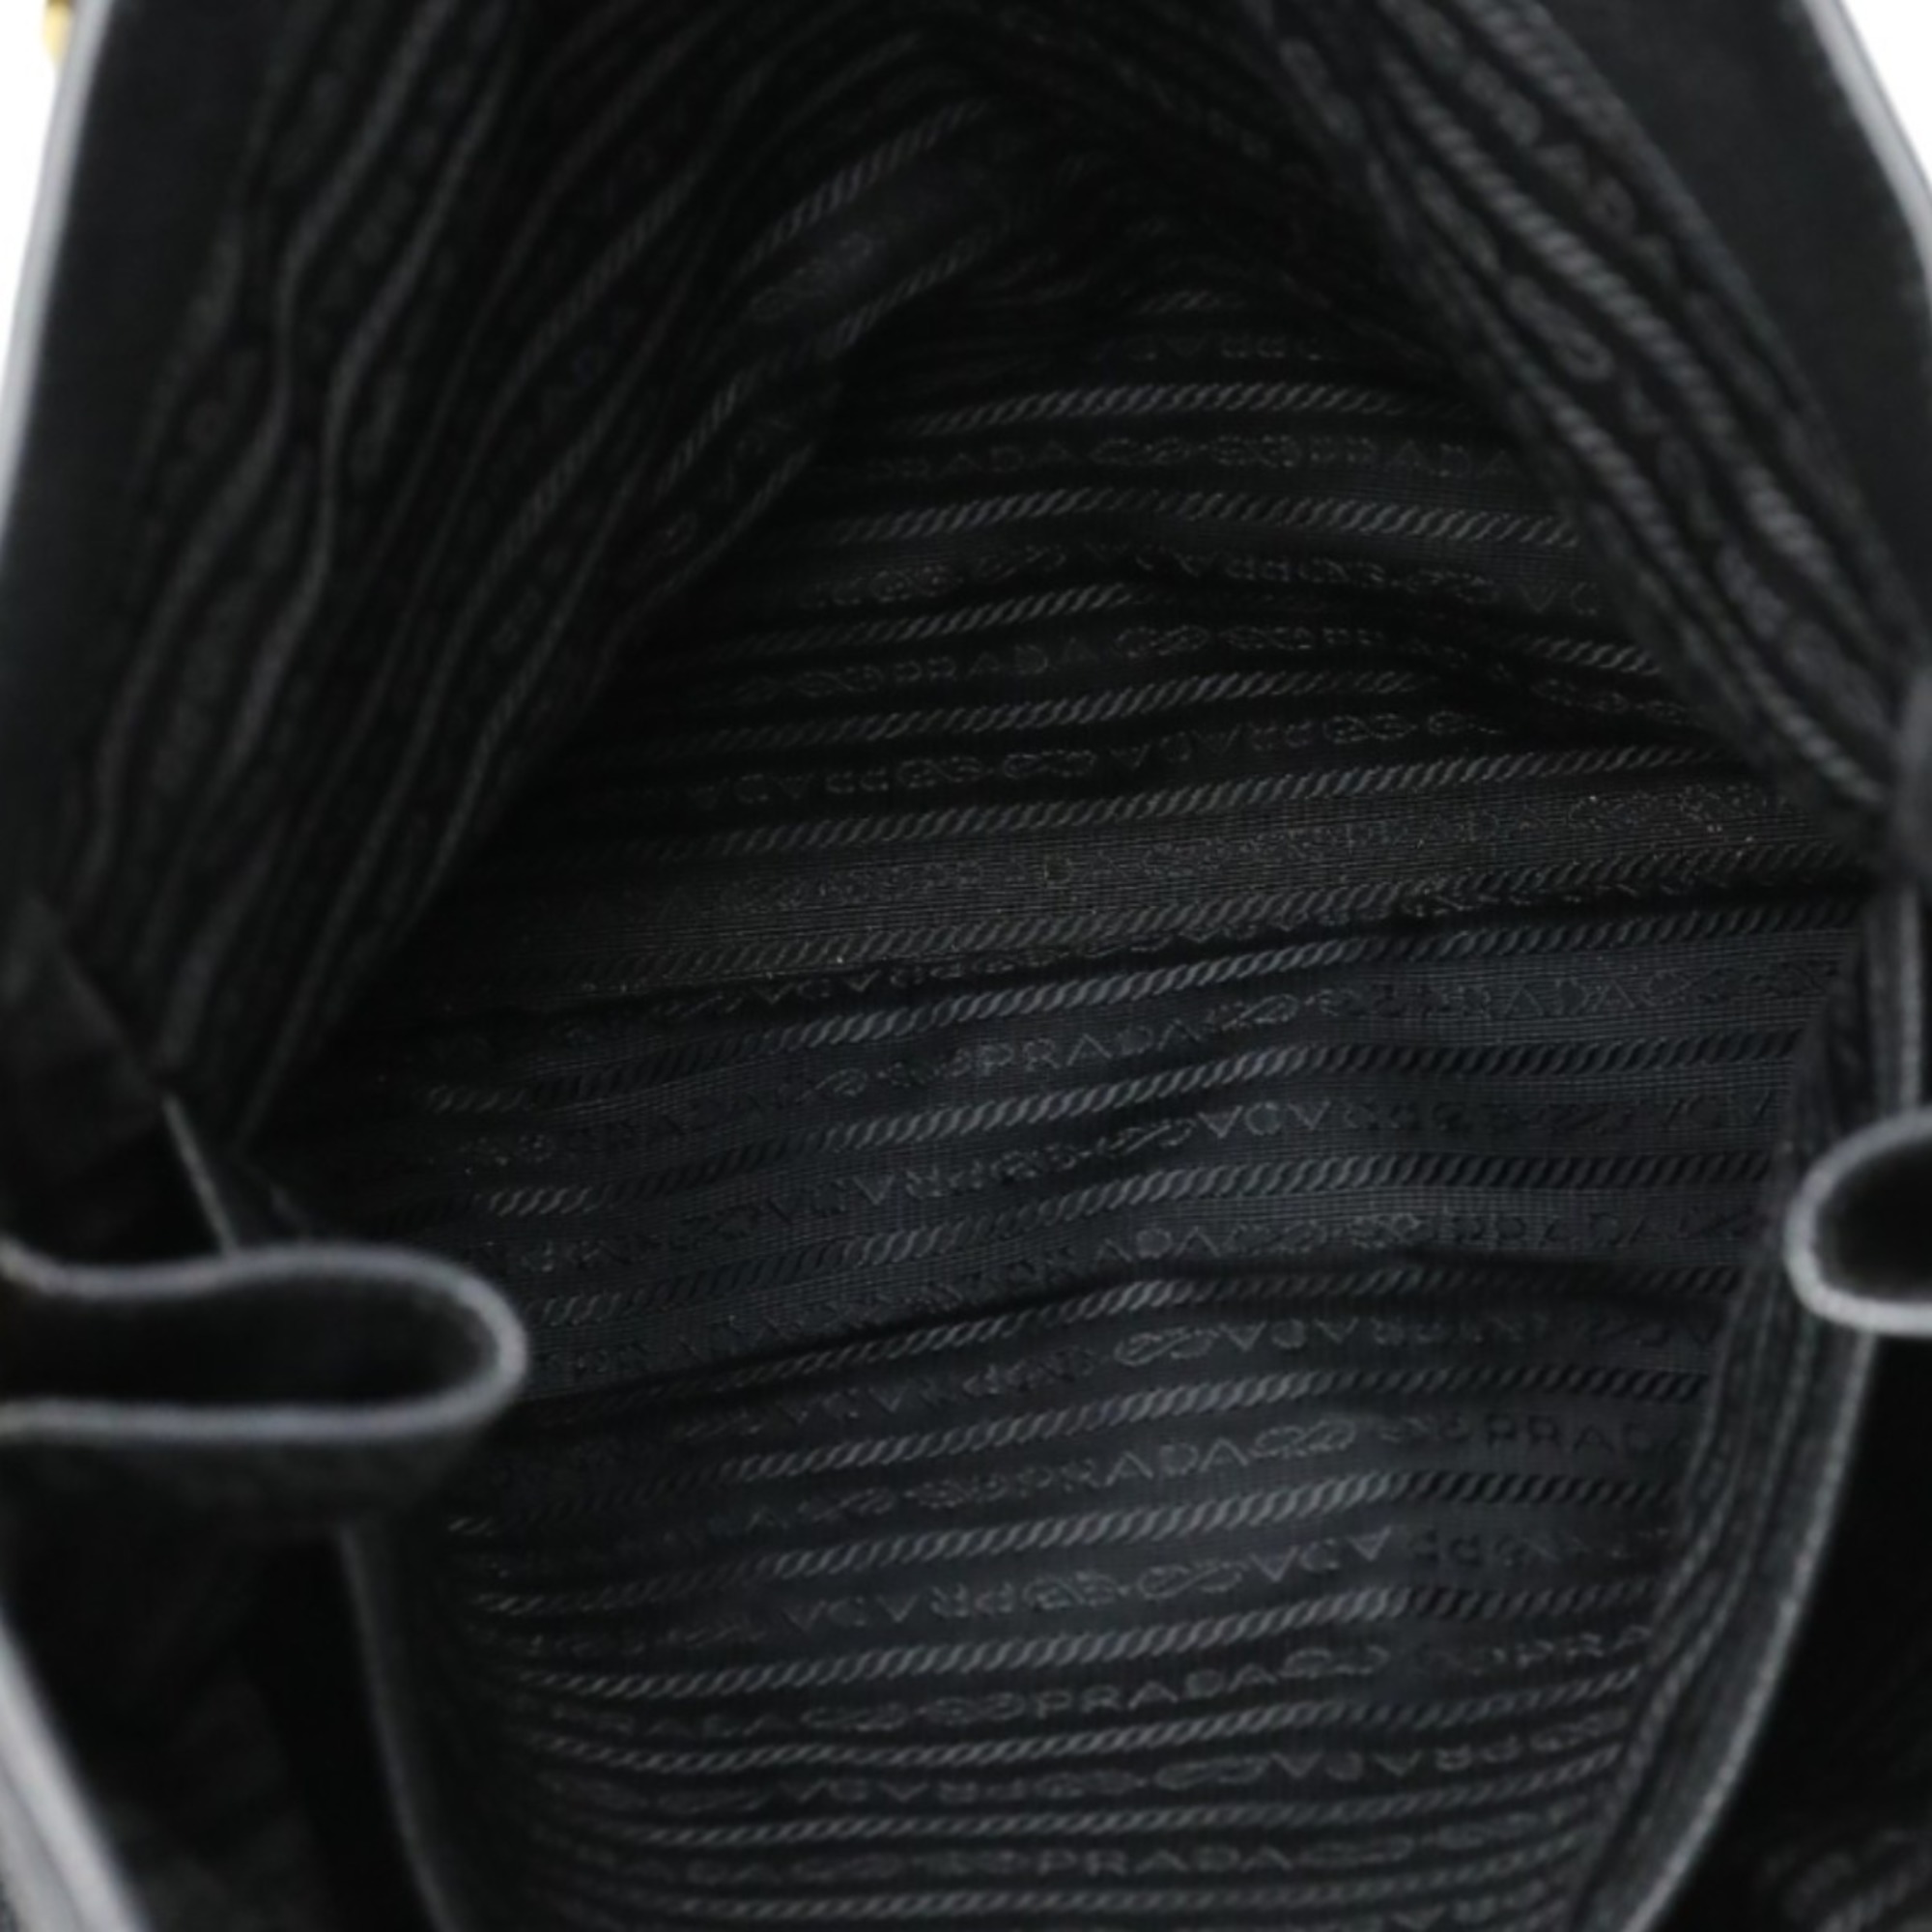 PRADA bag leather black